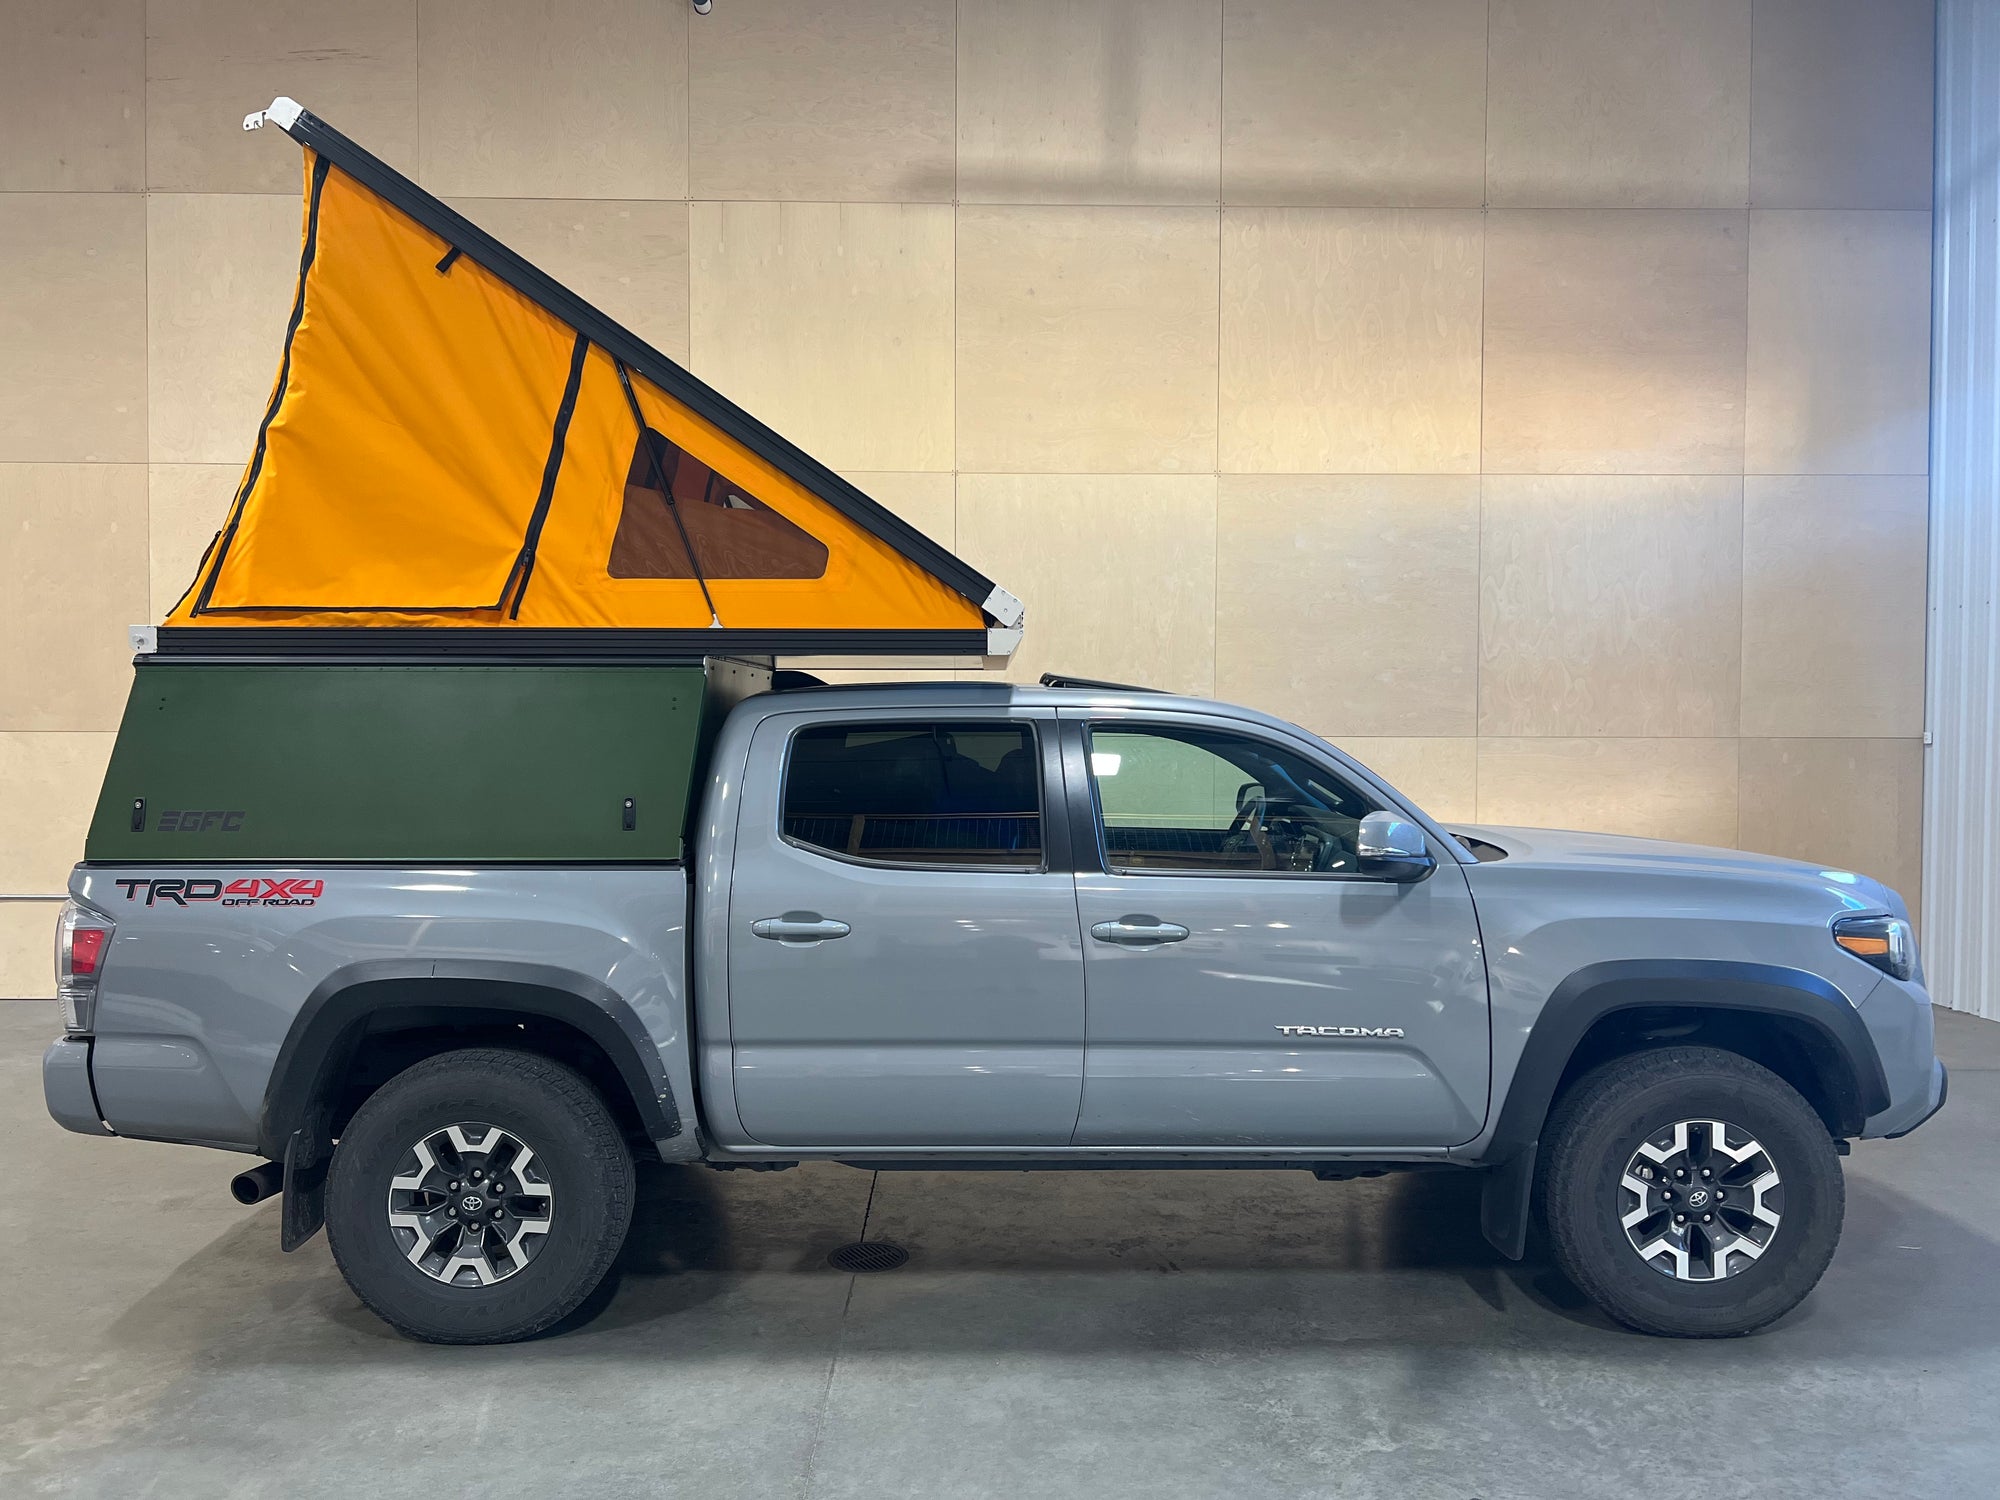 2020 Toyota Tacoma Camper - Build #4292